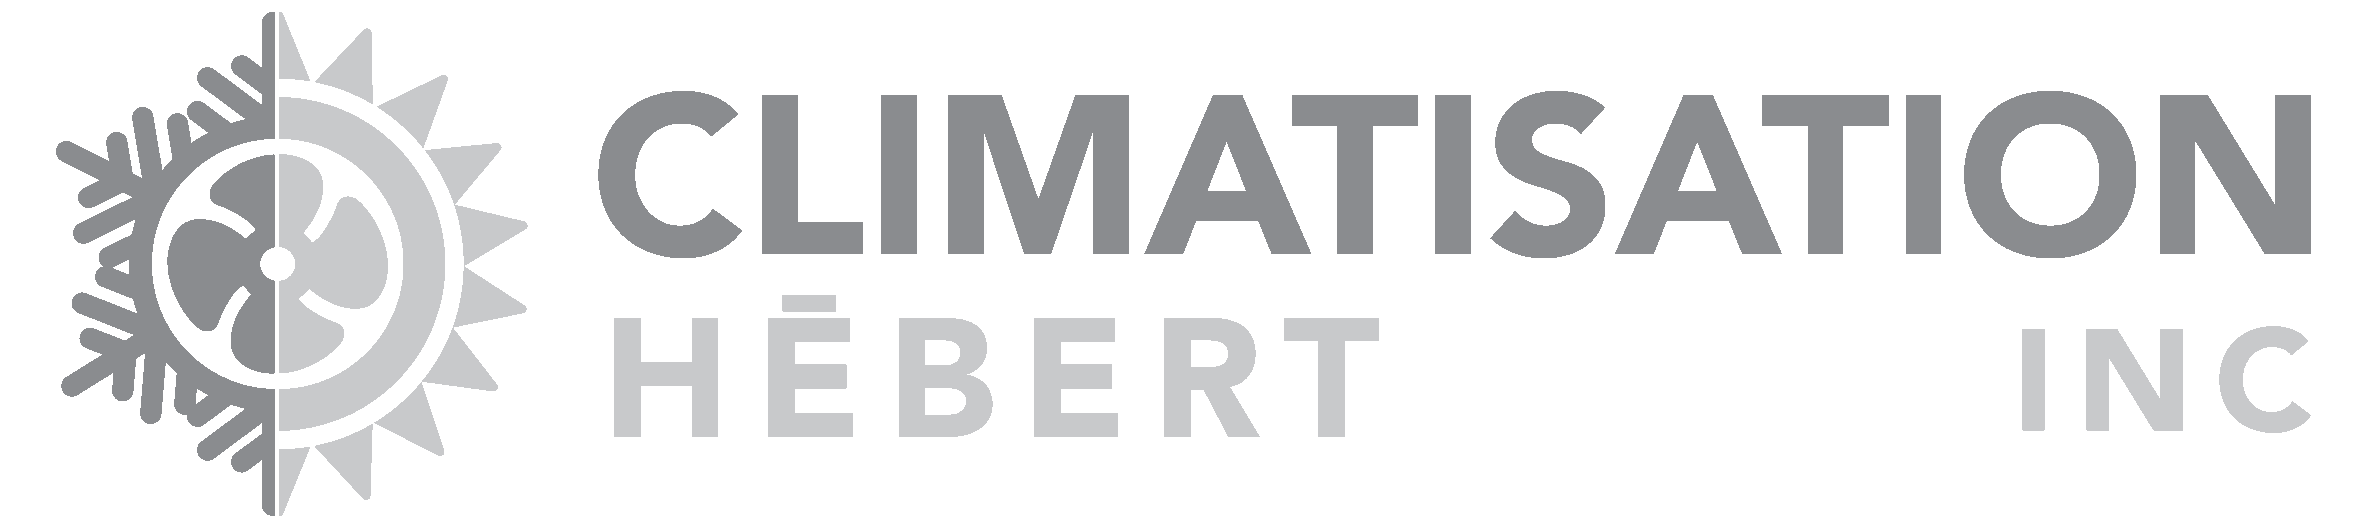 Climatisation Hebert logo